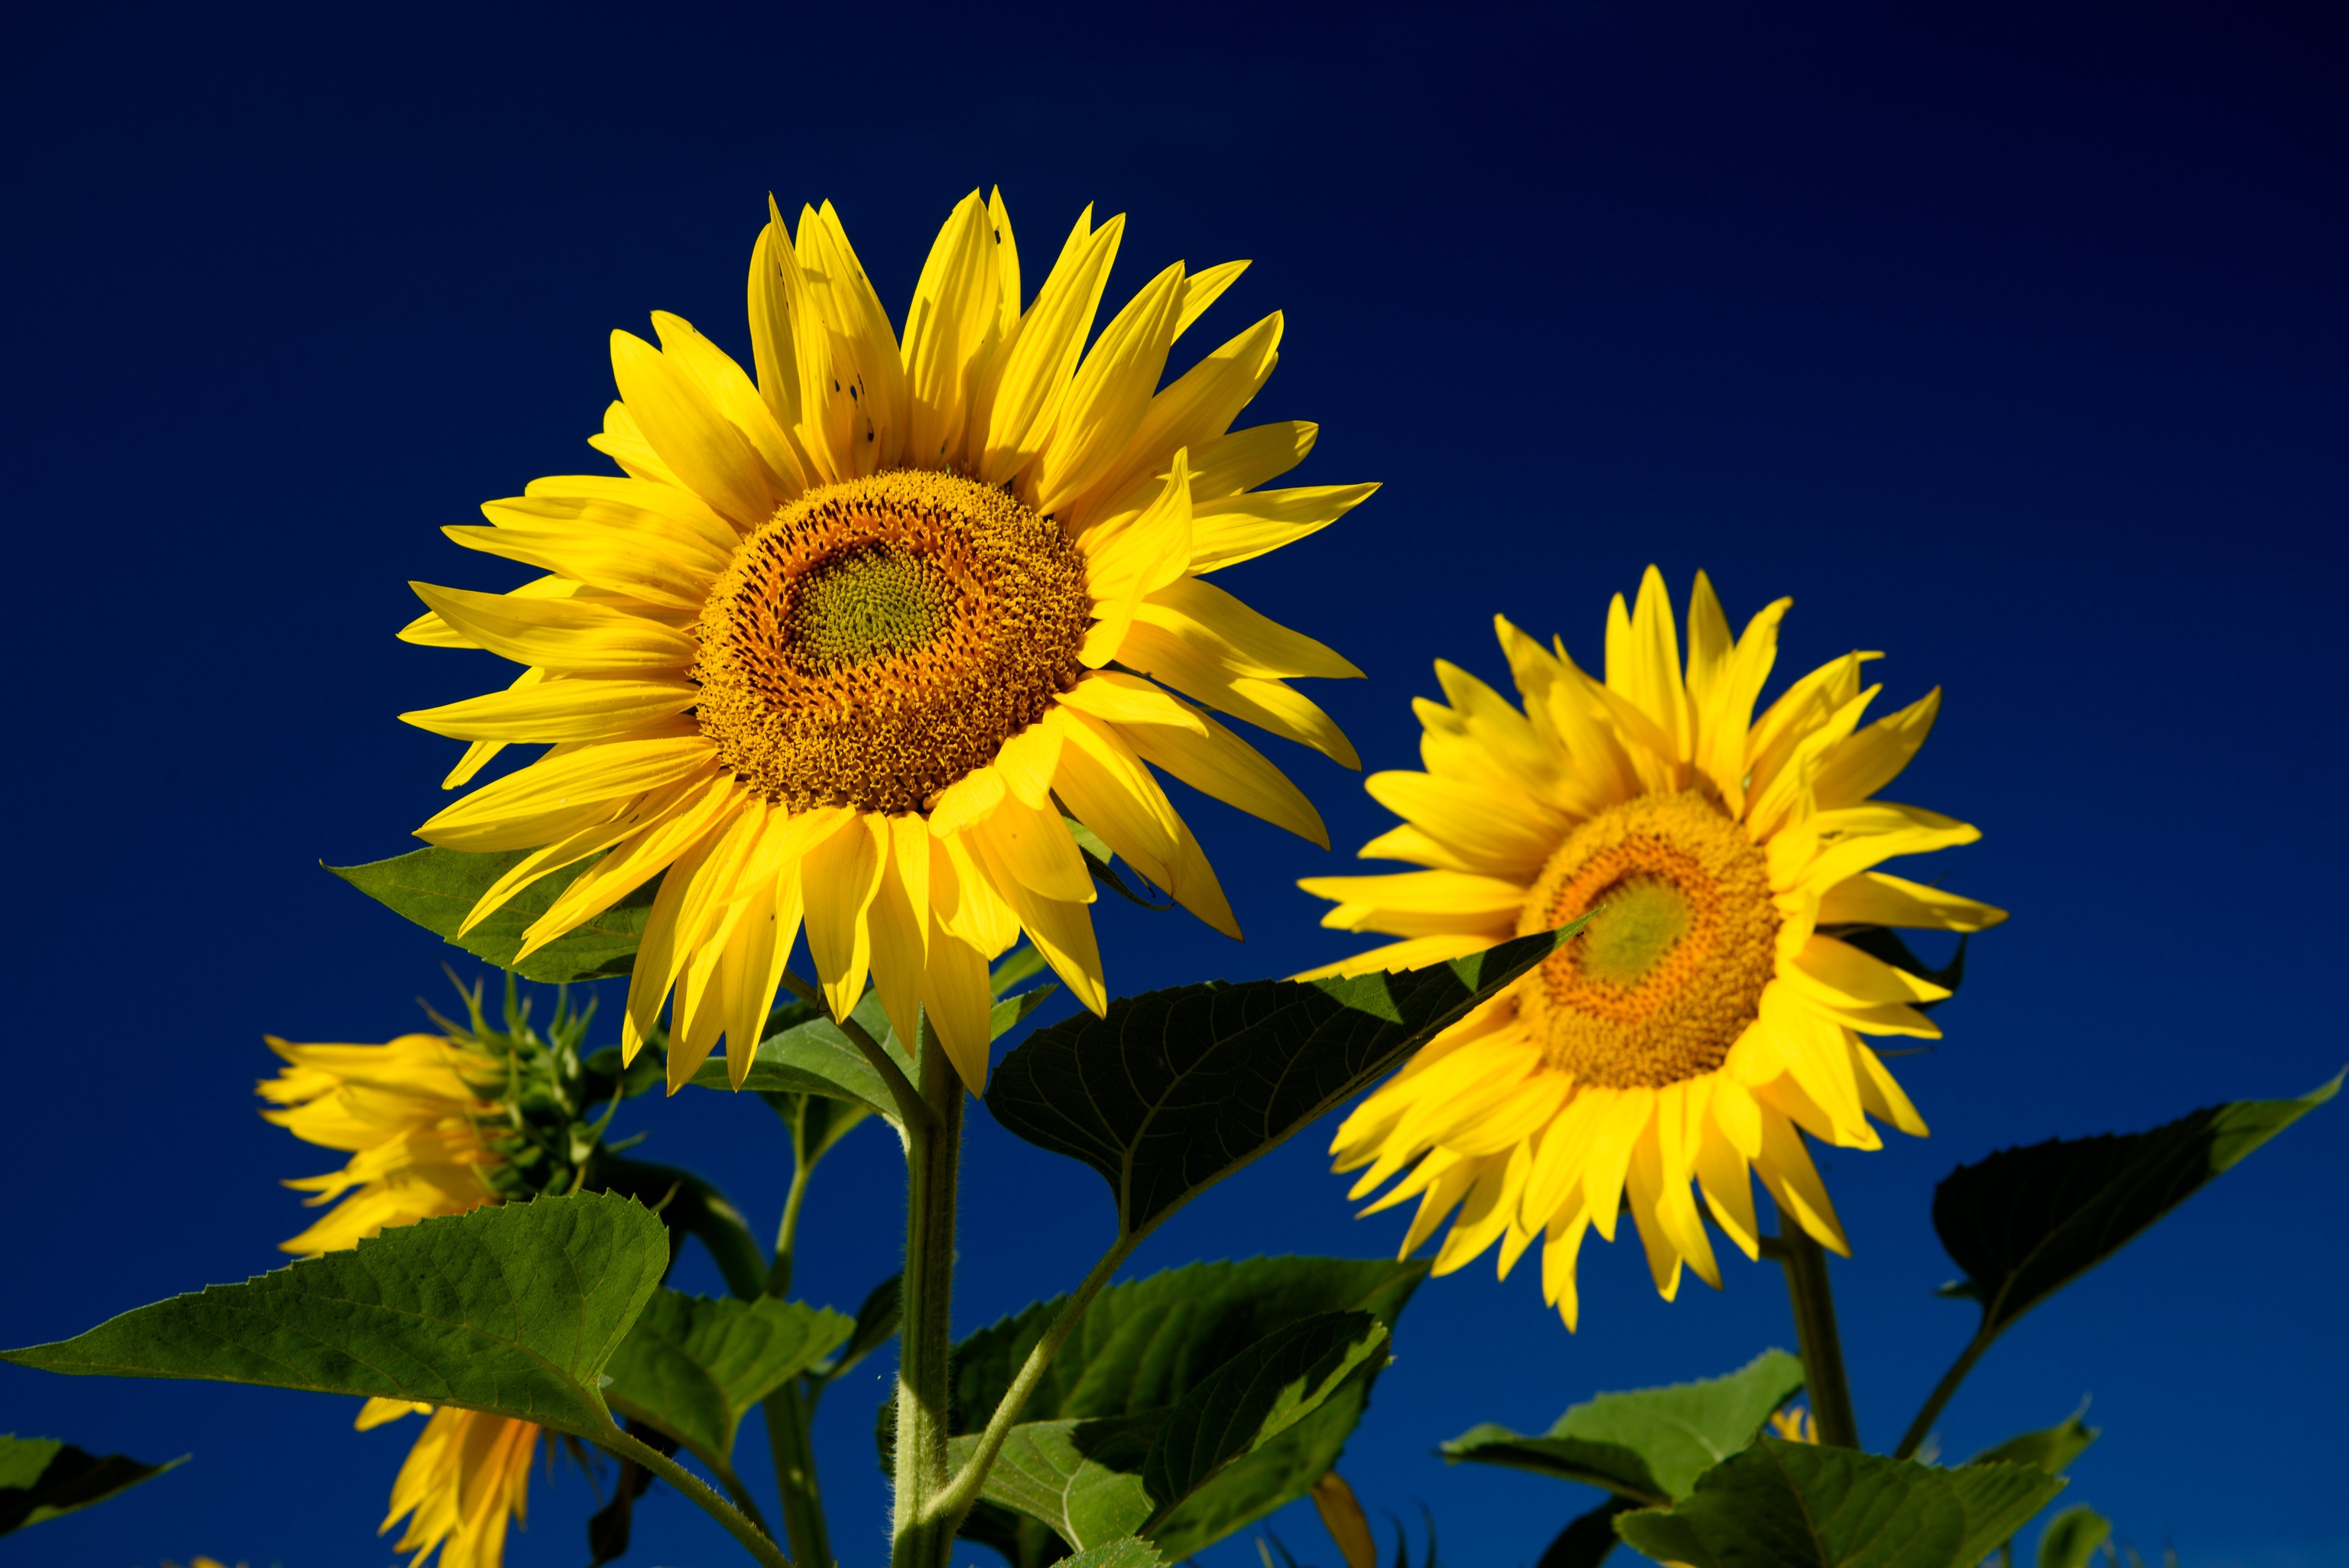 Sky Sunflower 3072x2051